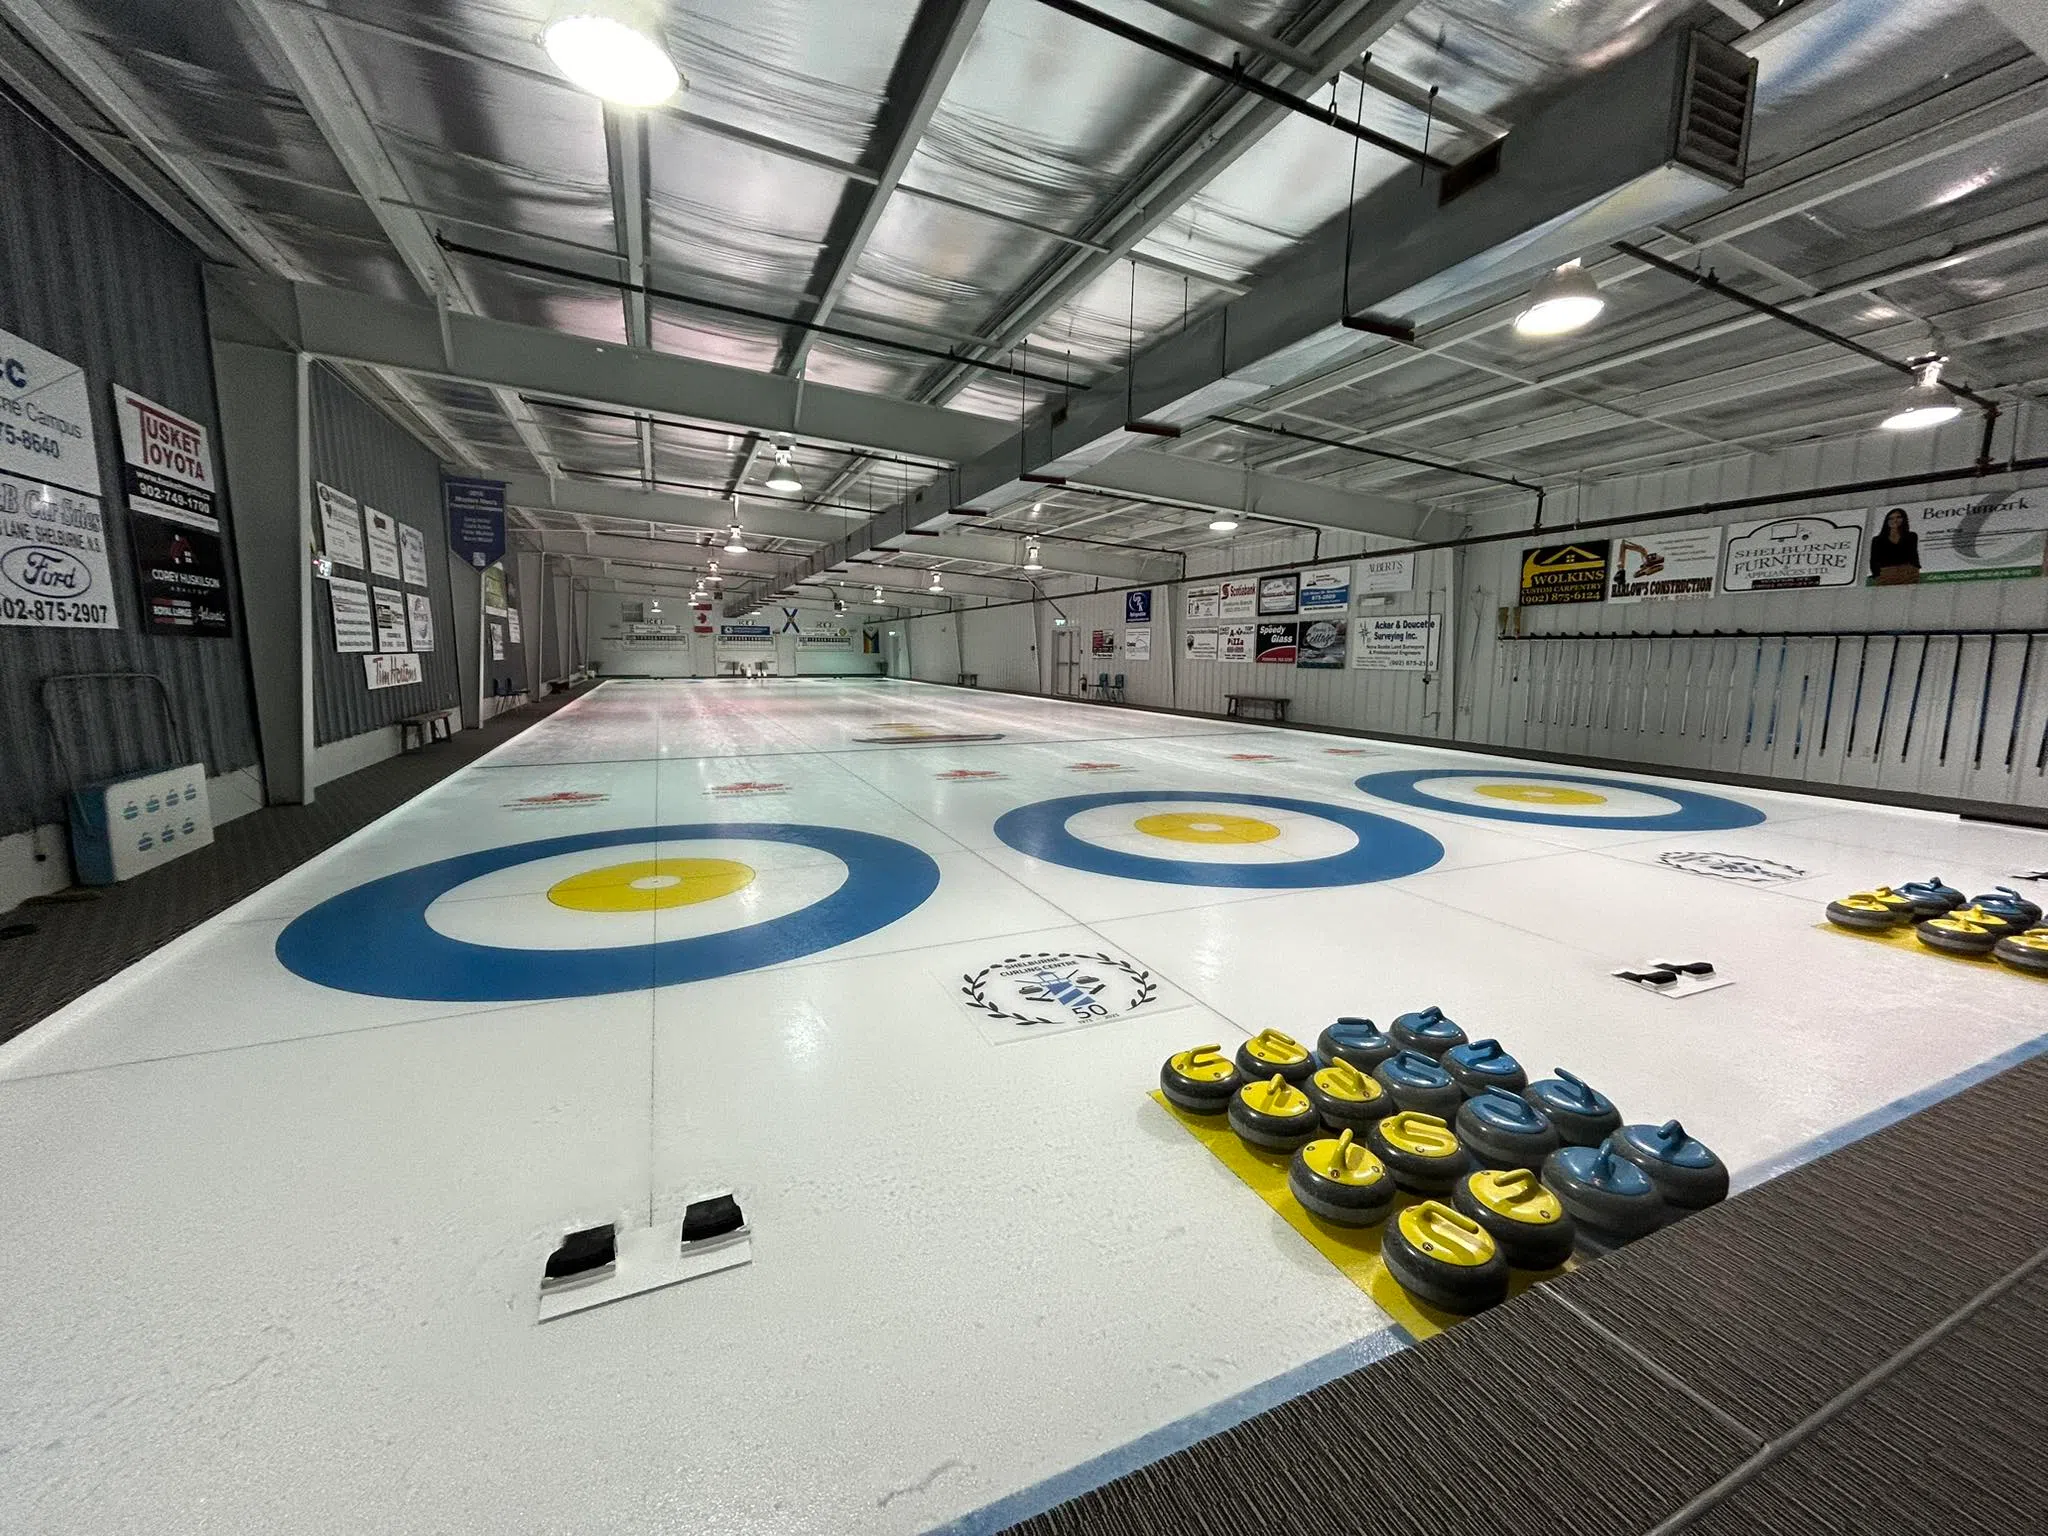 Mixed curling provincials coming to Shelburne